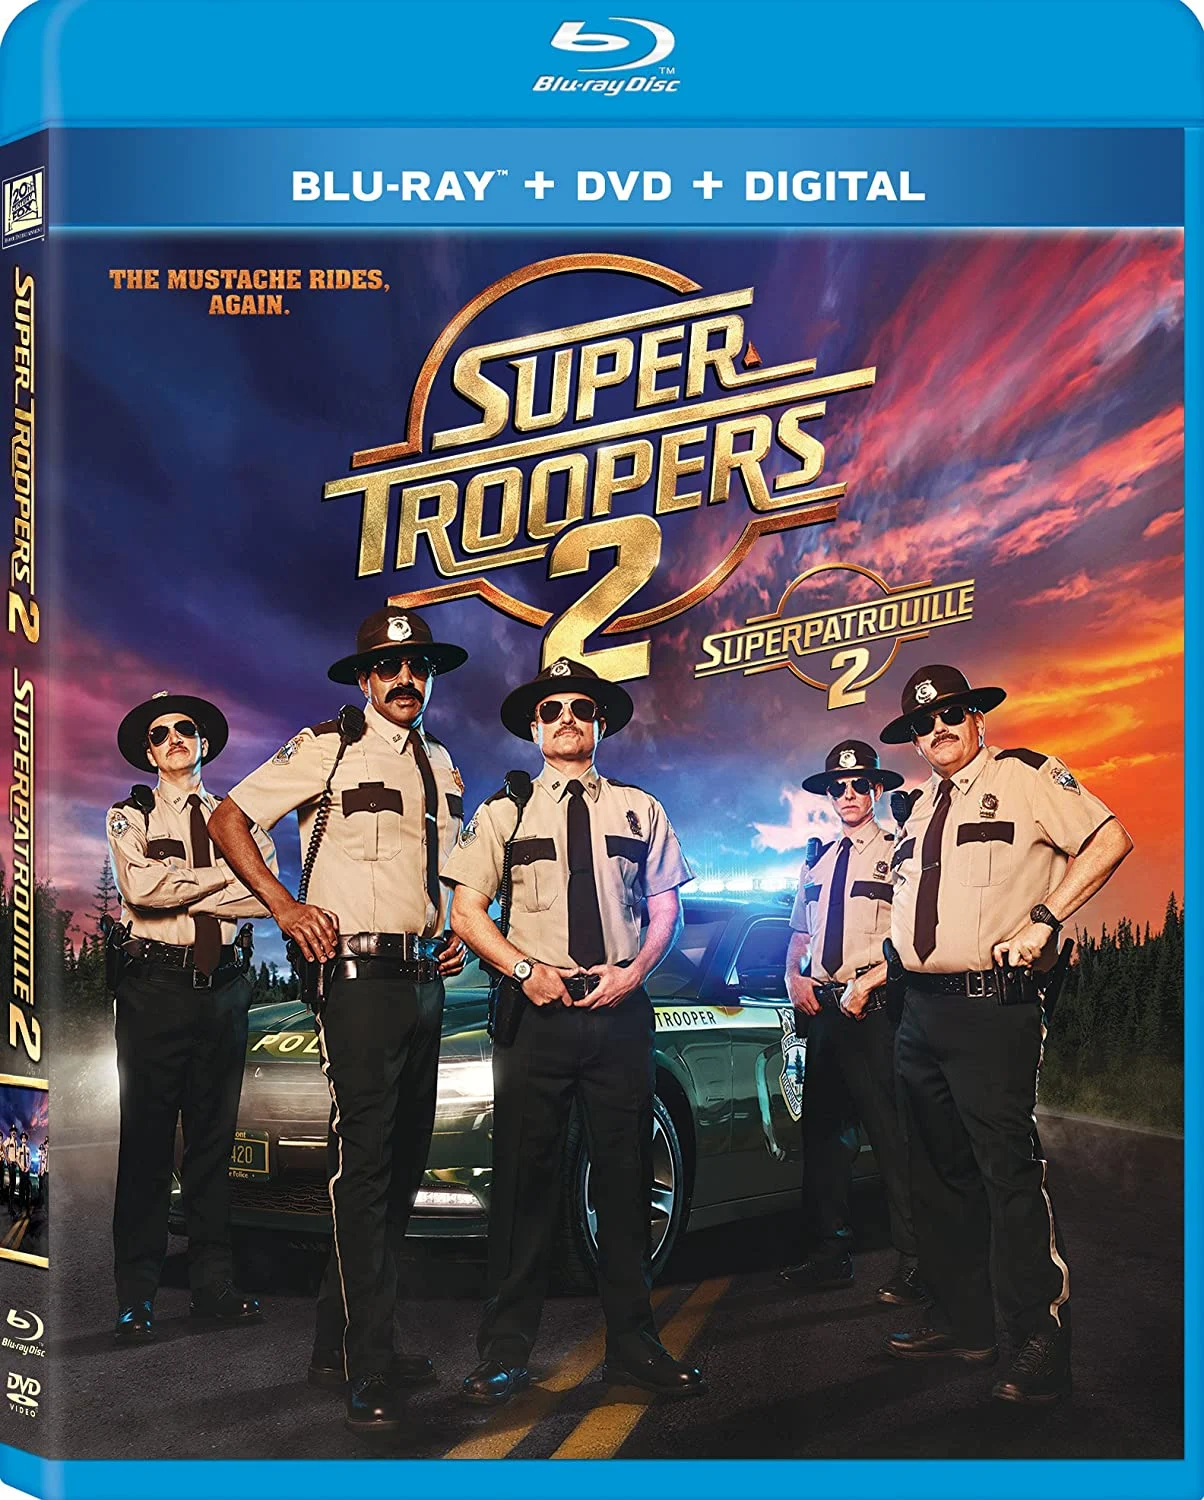 Super Troopers 2 (Blu-ray/DVD Combo) on MovieShack